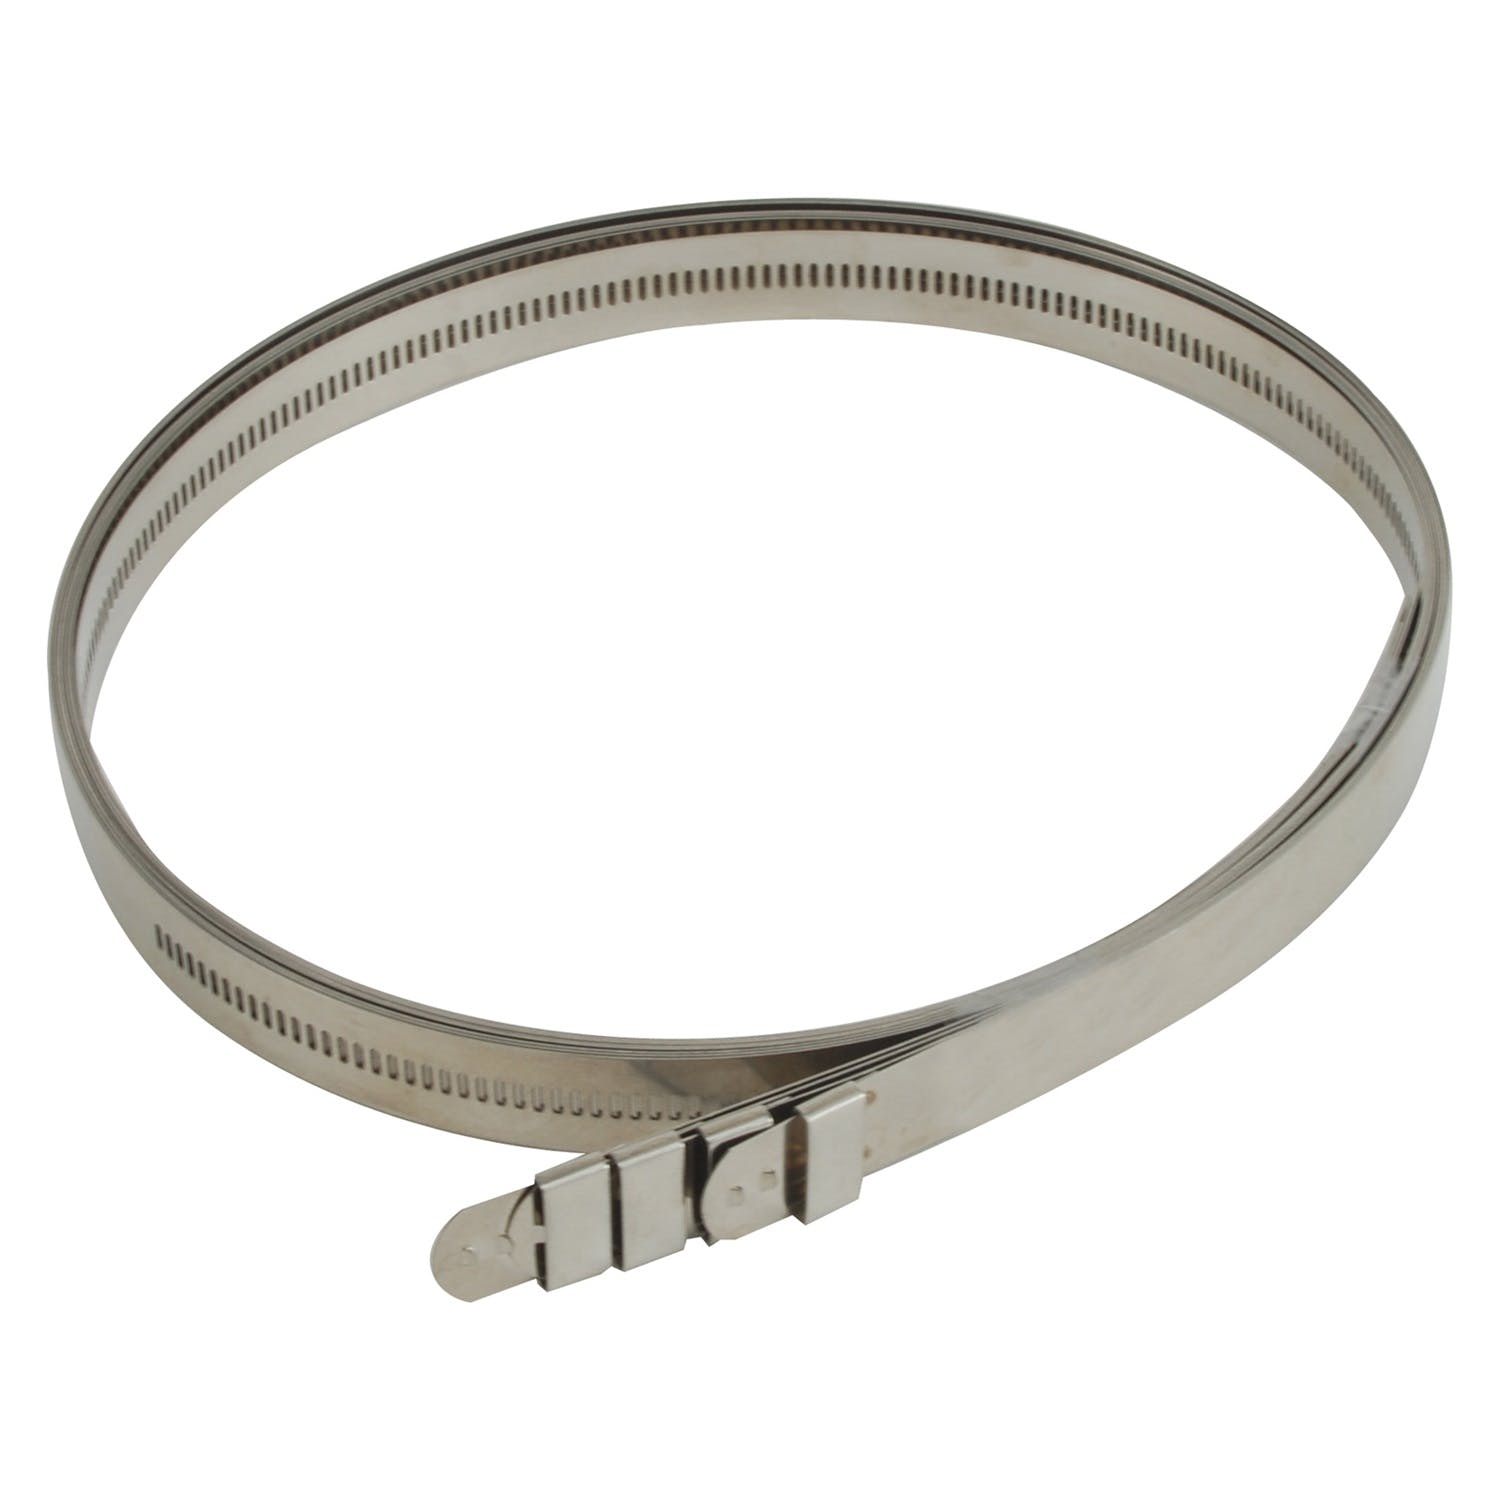 Design Engineering, Inc. 10217 Stainless Steel Positive Locking Ties - 1/2 (12mm) x 40 - 4 per pack